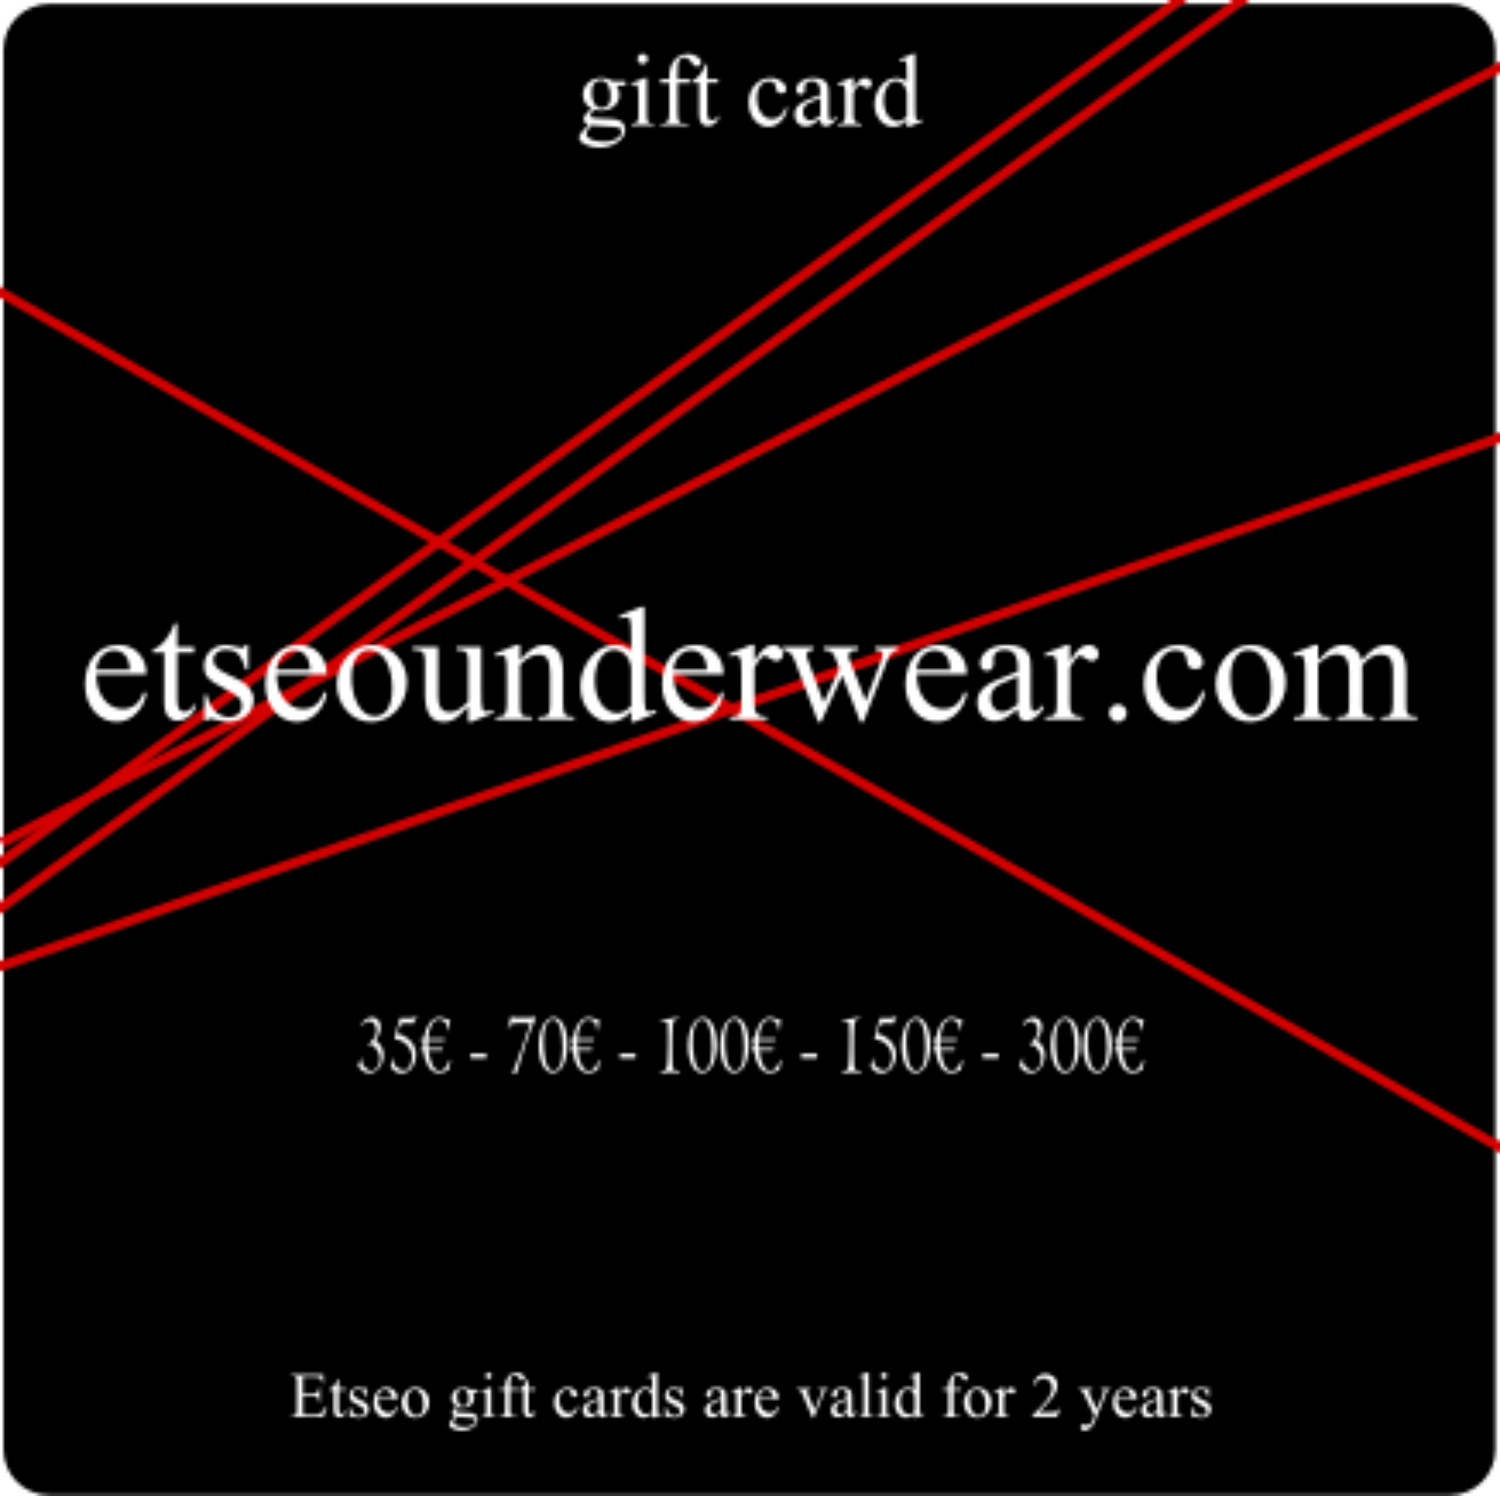 Etseo Men's Underwear gift card